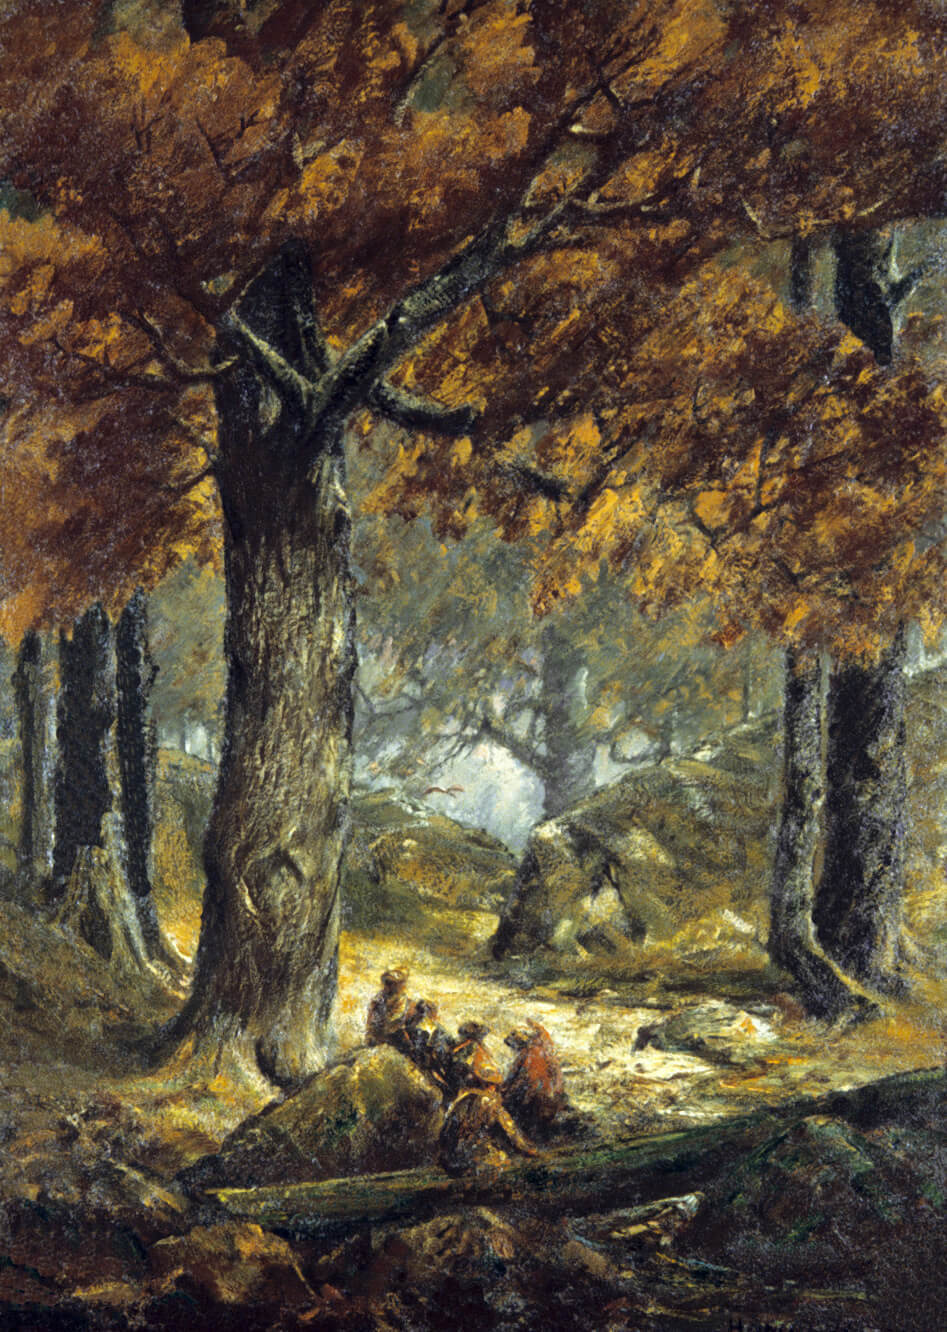 Homer Watson, Nut Gatherers in the Forest (Cueilleurs de noix dans la forêt), 1900